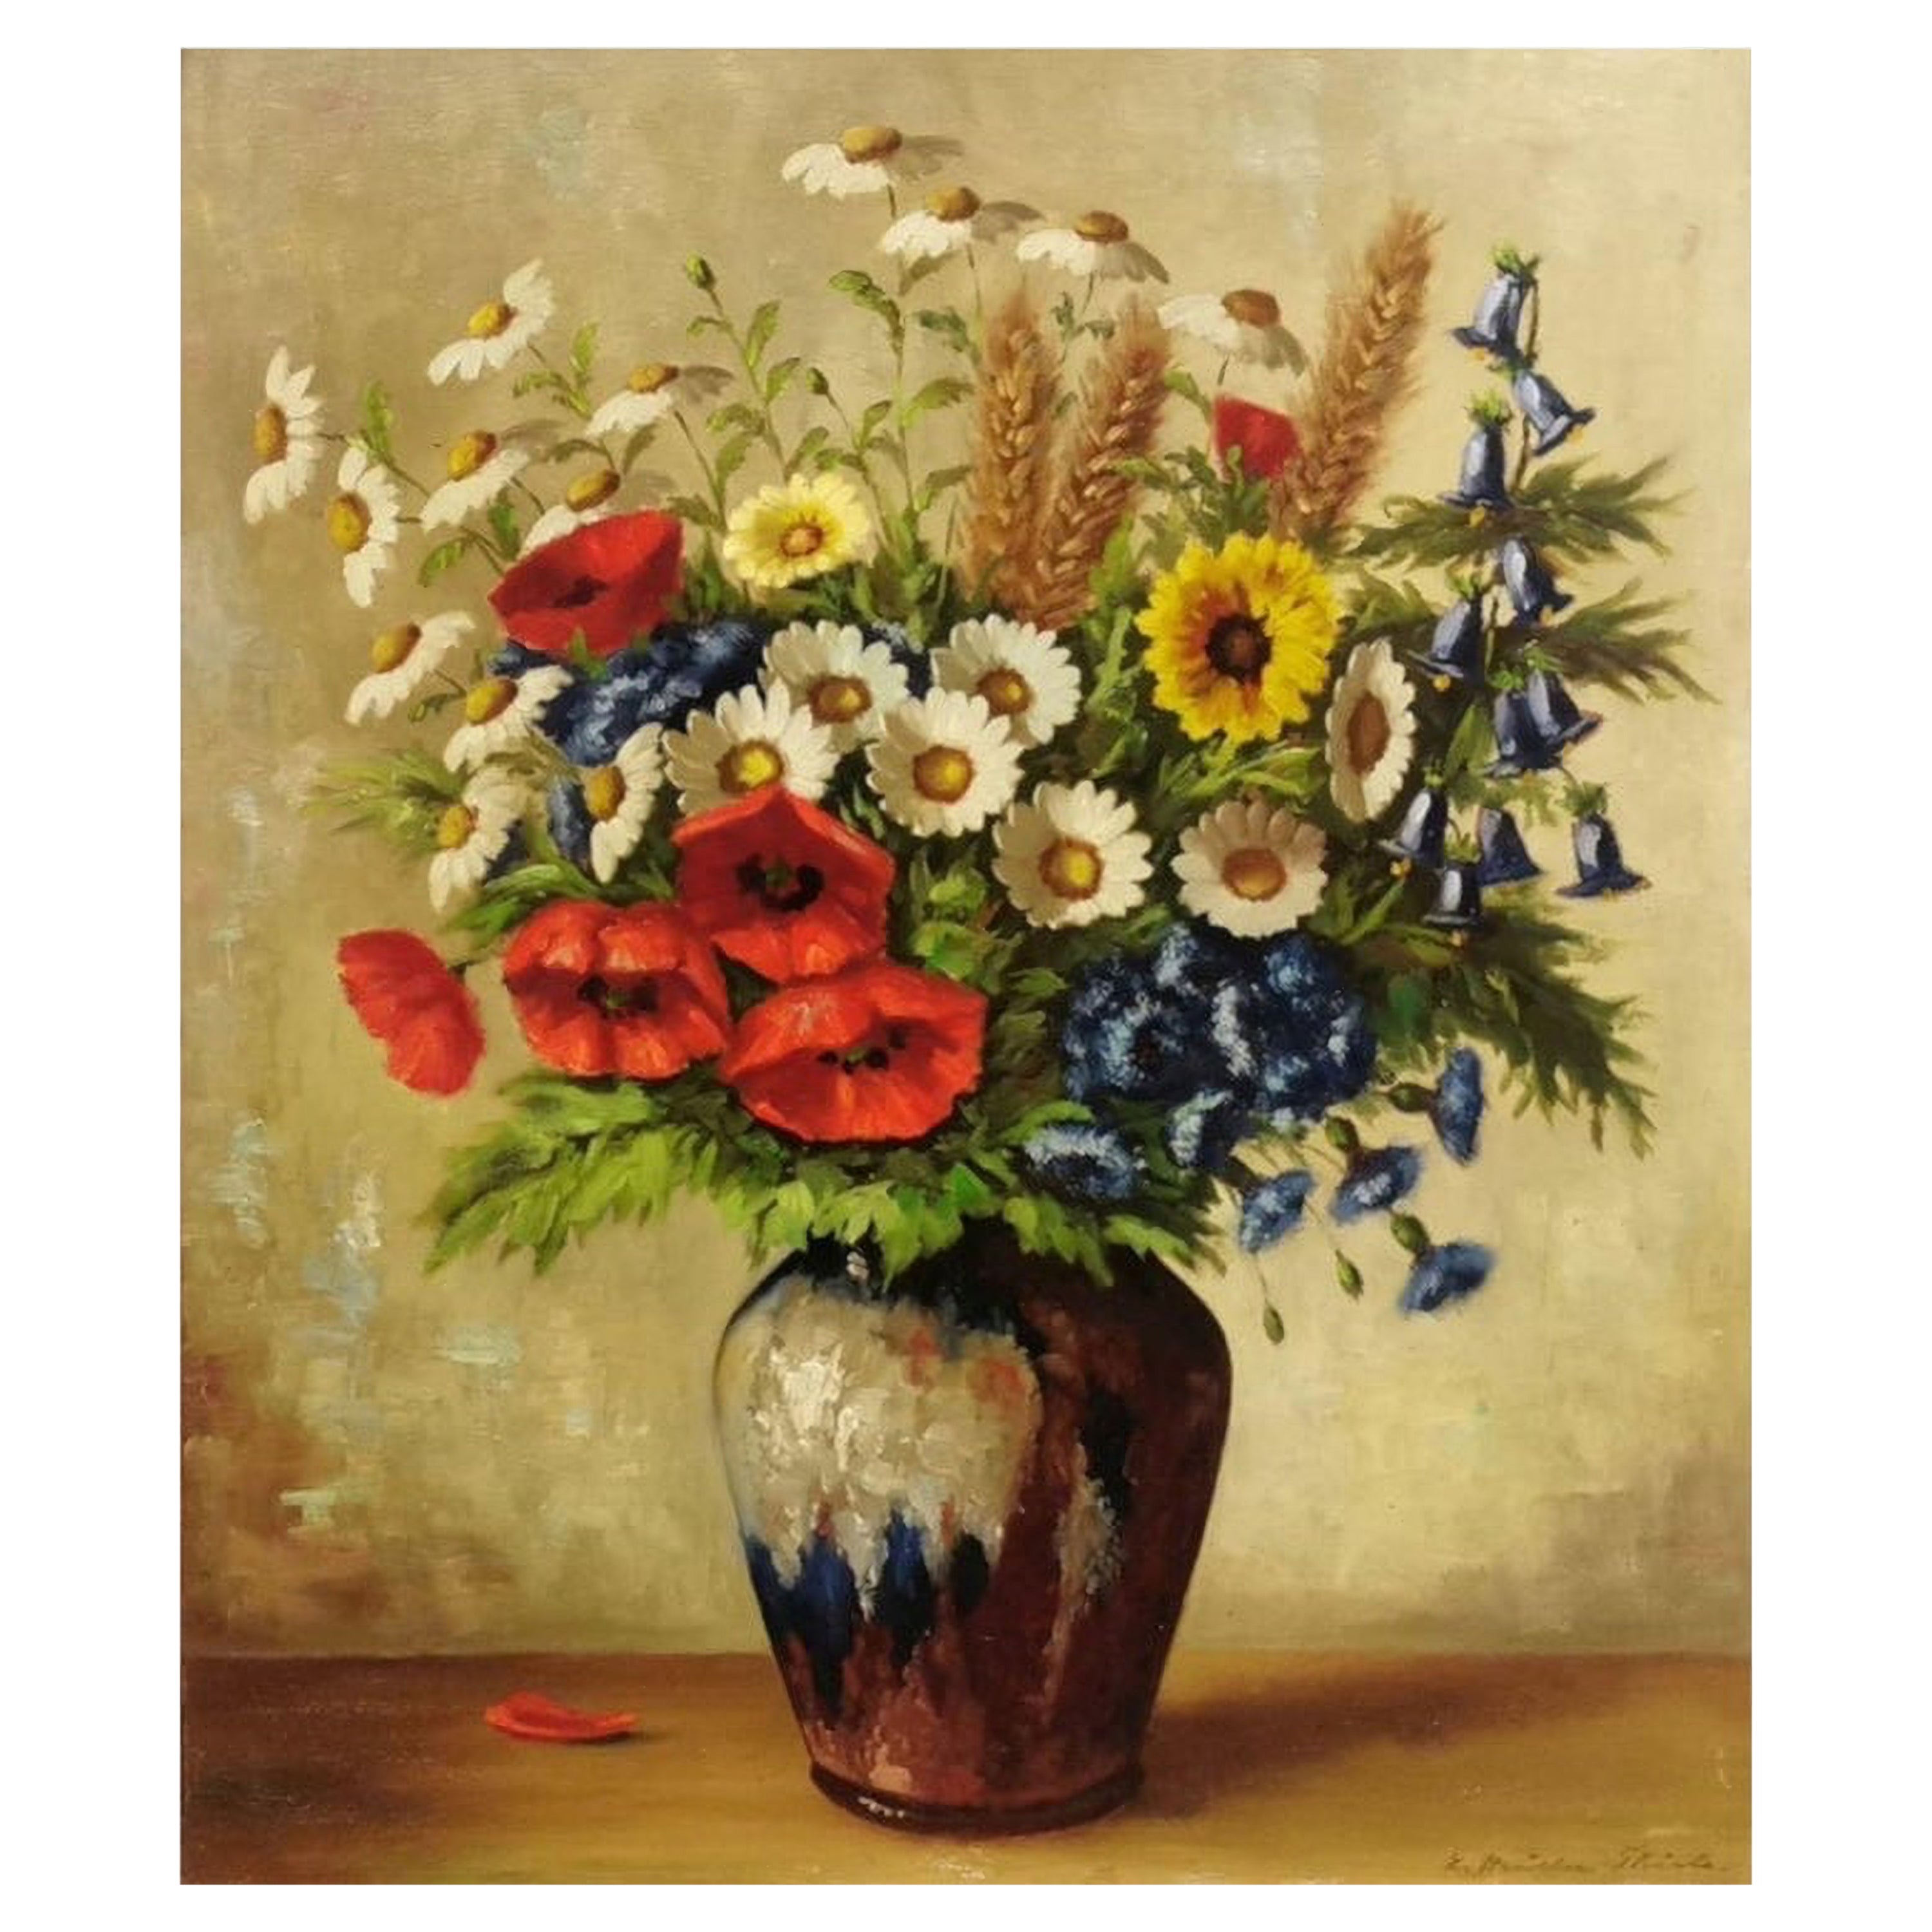 German Painter of the 19th Century "Flower Still Life"